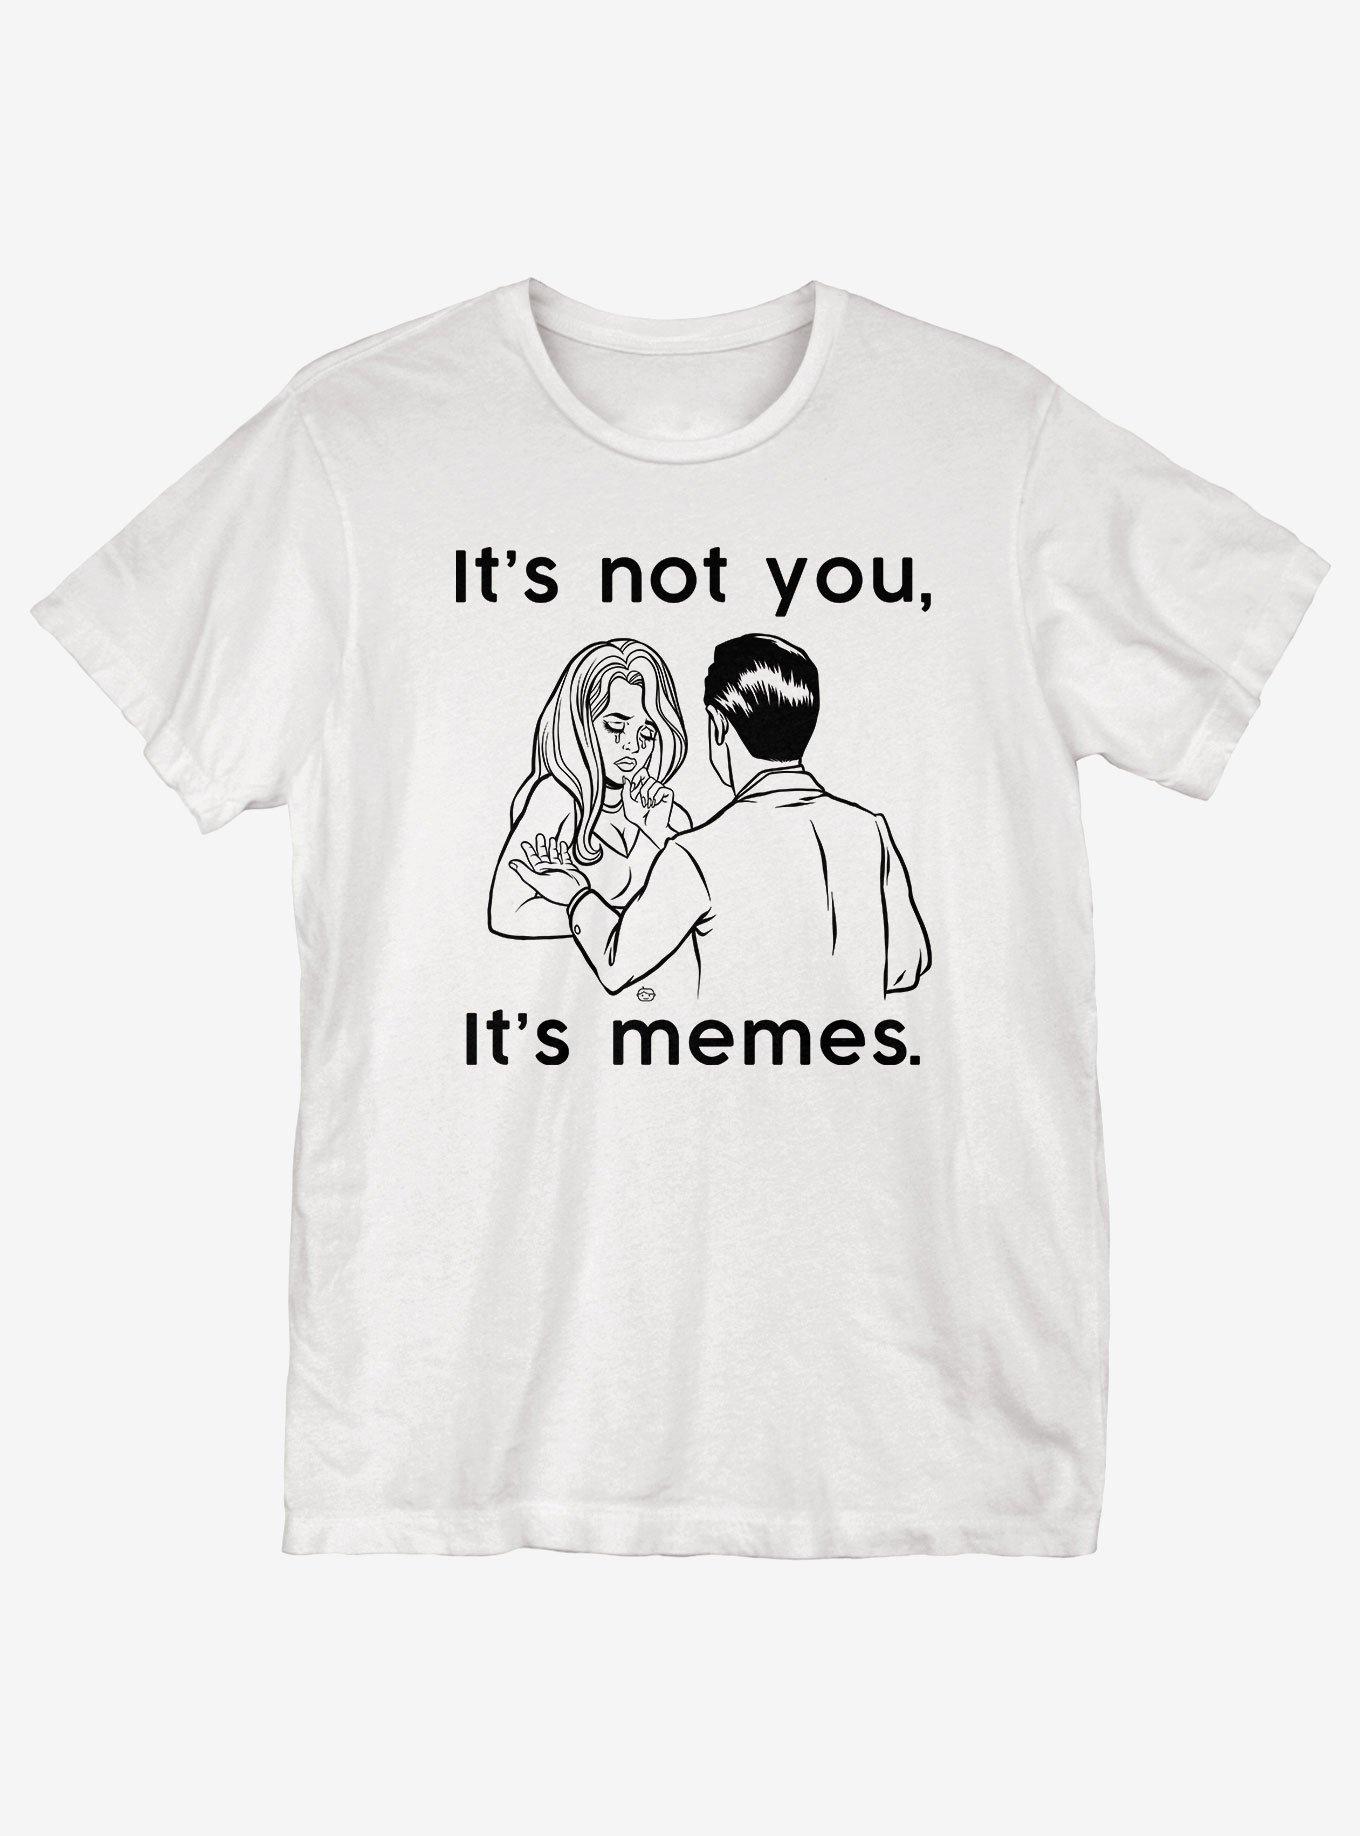 You Dropped This Meme Unisex T-Shirt - Funny Meme Clothing Tee T Shirt with  Meme